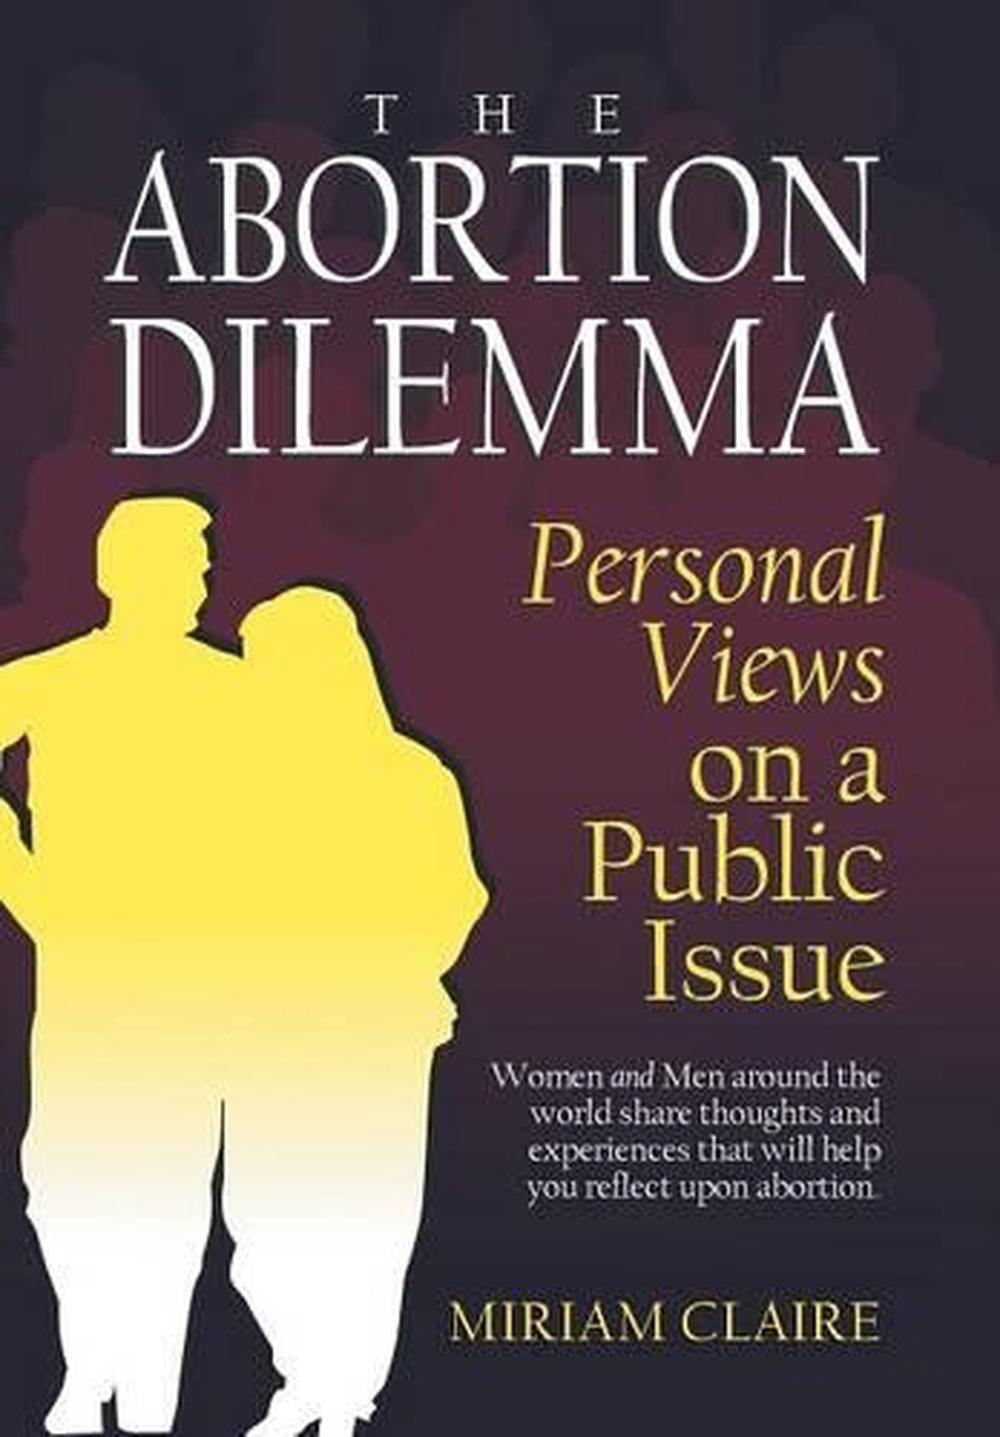 ethical dilemma essay on abortion